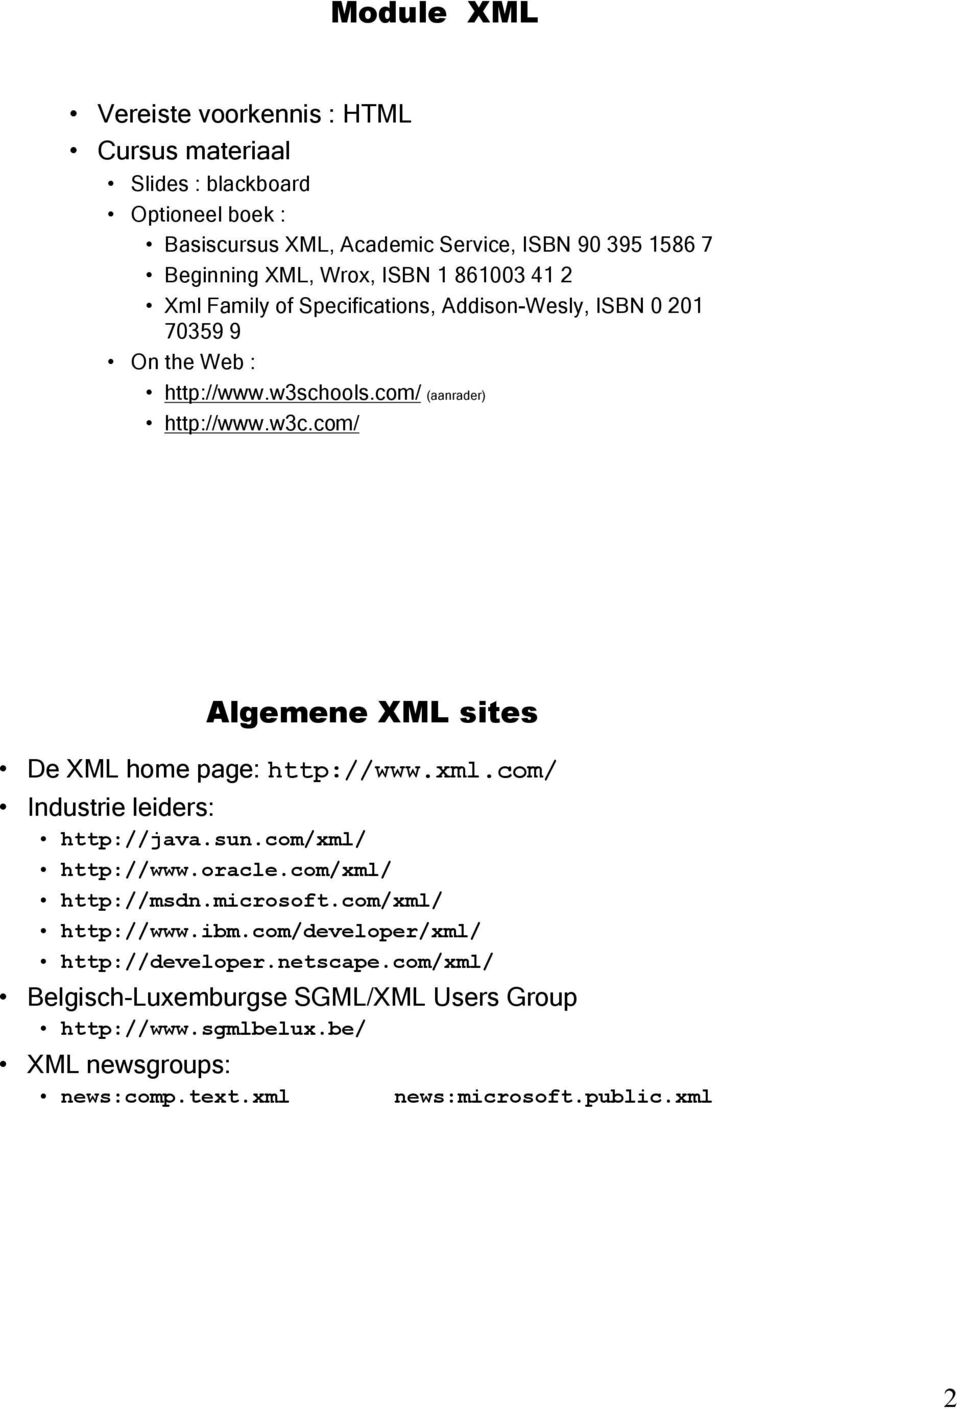 com/ Algemene XML sites De XML home page: http://www.xml.com/ Industrie leiders: http://java.sun.com/xml/ http://www.oracle.com/xml/ http://msdn.microsoft.